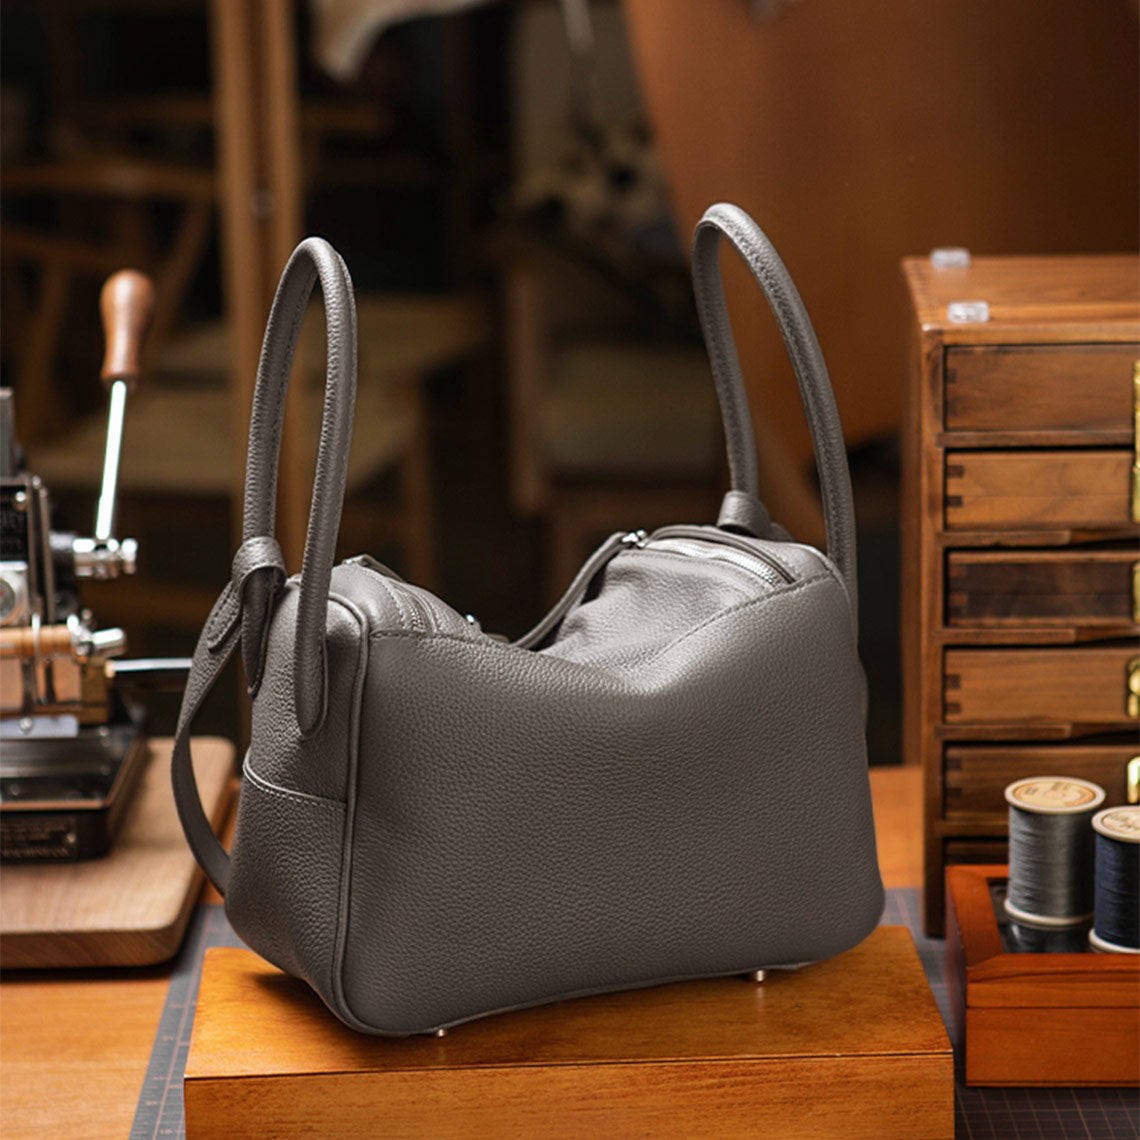 Hermes Lindy Bag Price is affordable with DIY leather Kits | DIY BAG Kit | POPSEWIN 